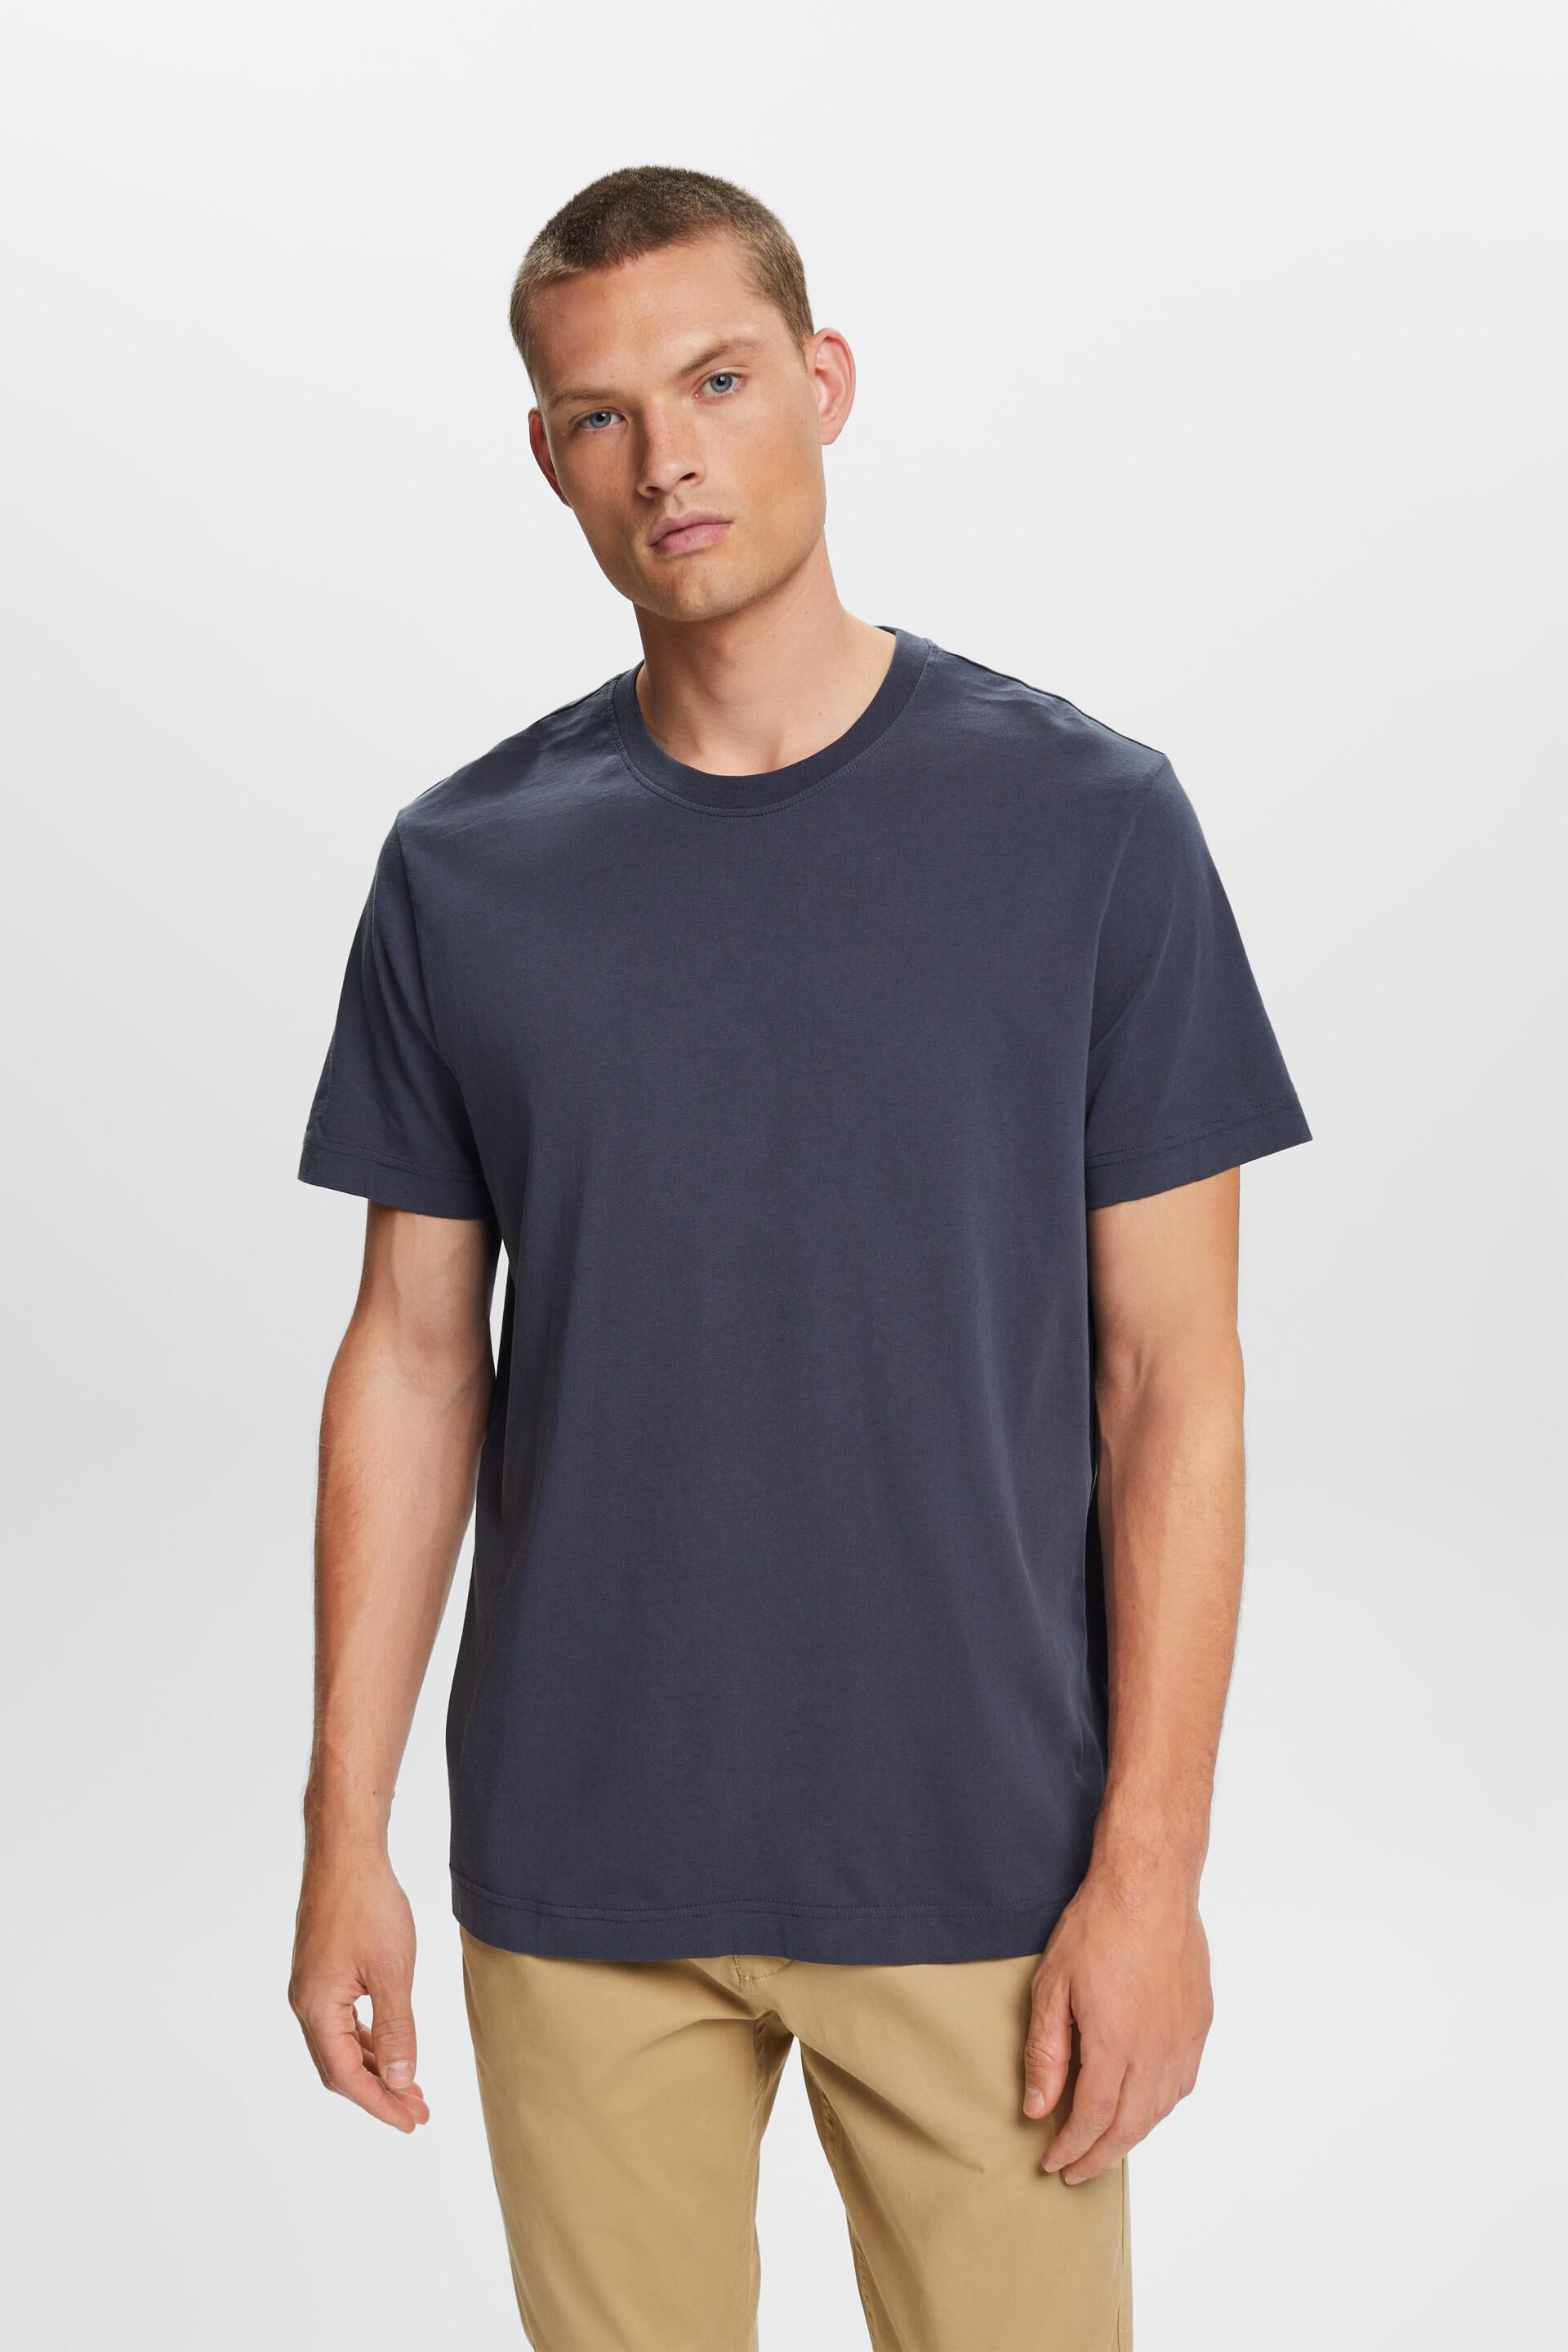 Esprit Bikini Jersey crewneck t-shirt, 100% cotton